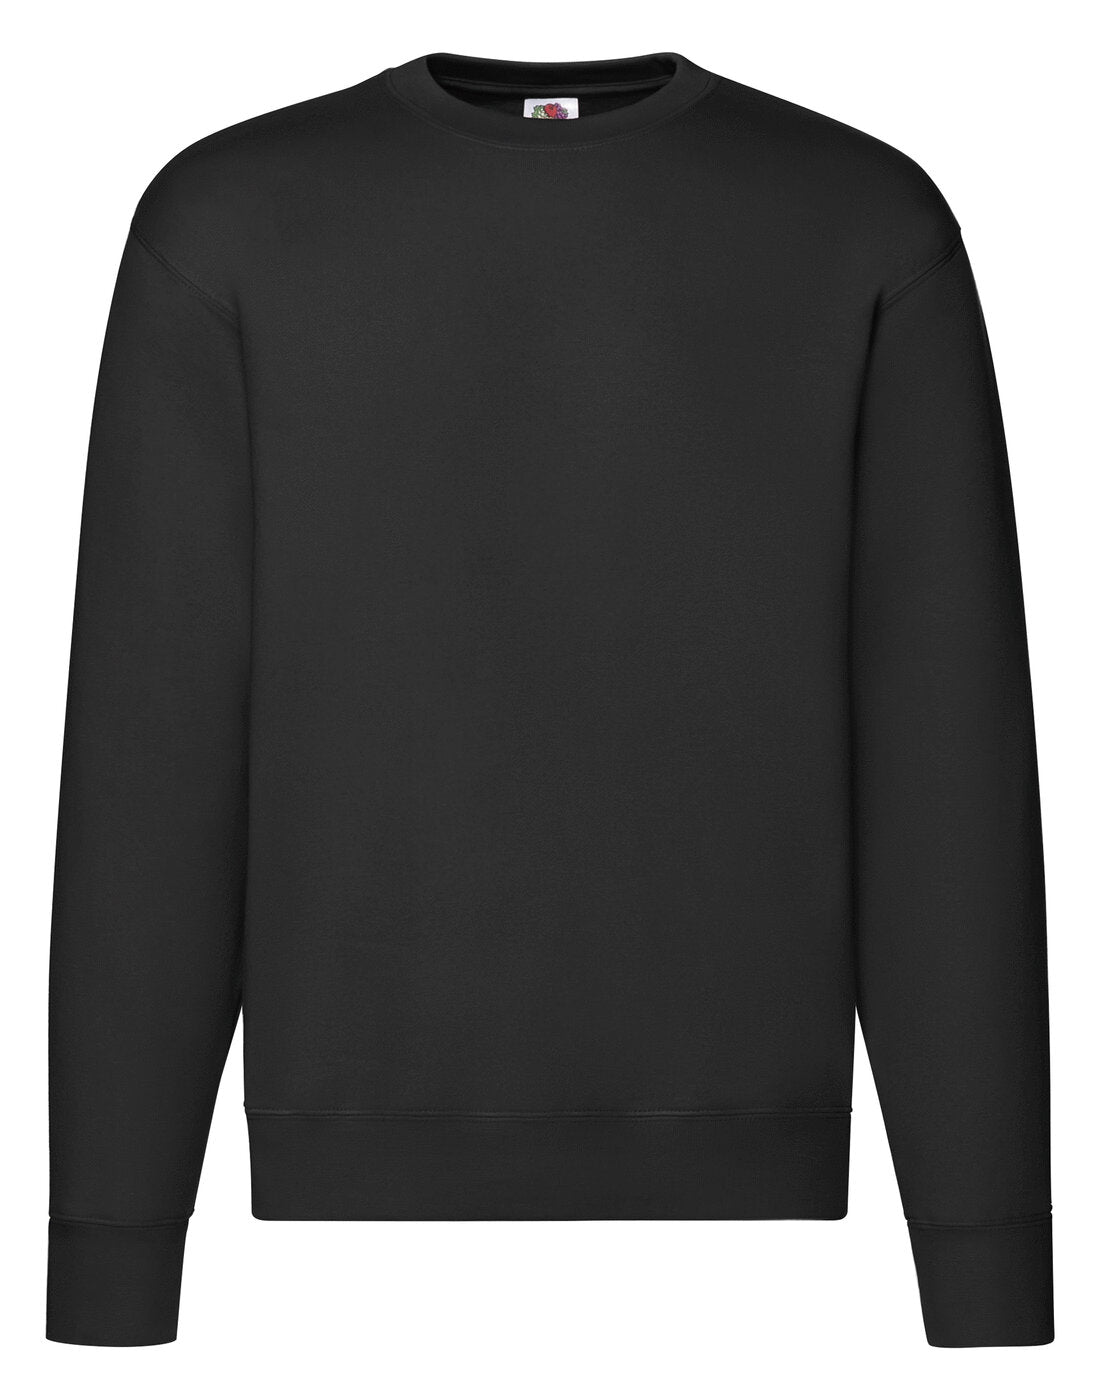 Fruit of the Loom Premium 70/30 Unisex Sweatshirt - Black